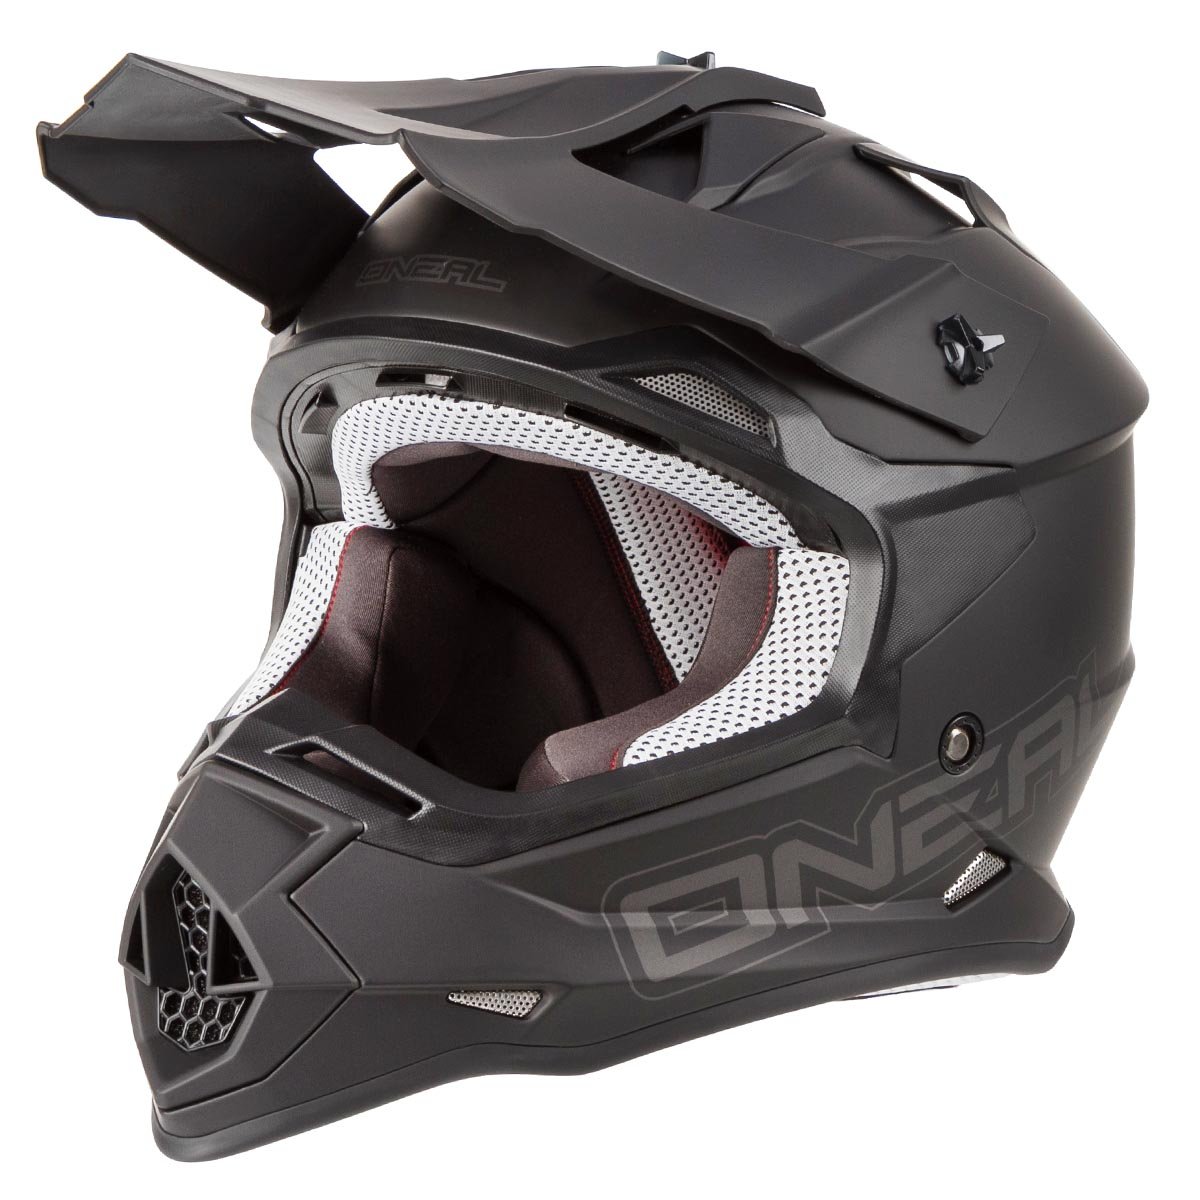 Motocross Helmet Adults O'NEAL 2 SERIES 2020 Enduro Bike Dirt Mx Race Flat Black 